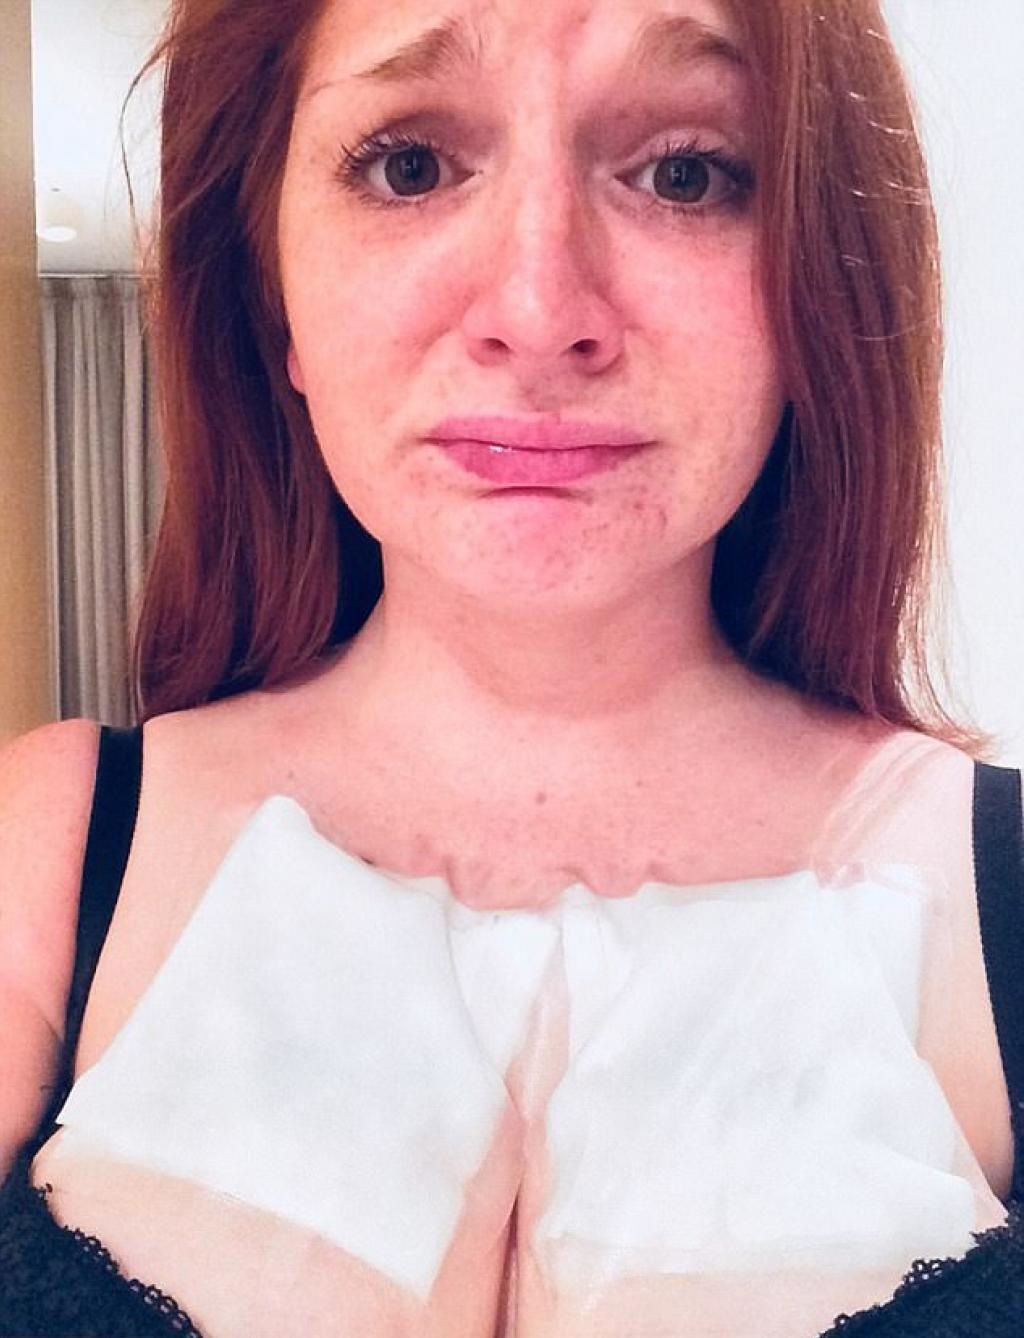 Angleterre : Une femme se tatoue les seins, elle va vite le regretter